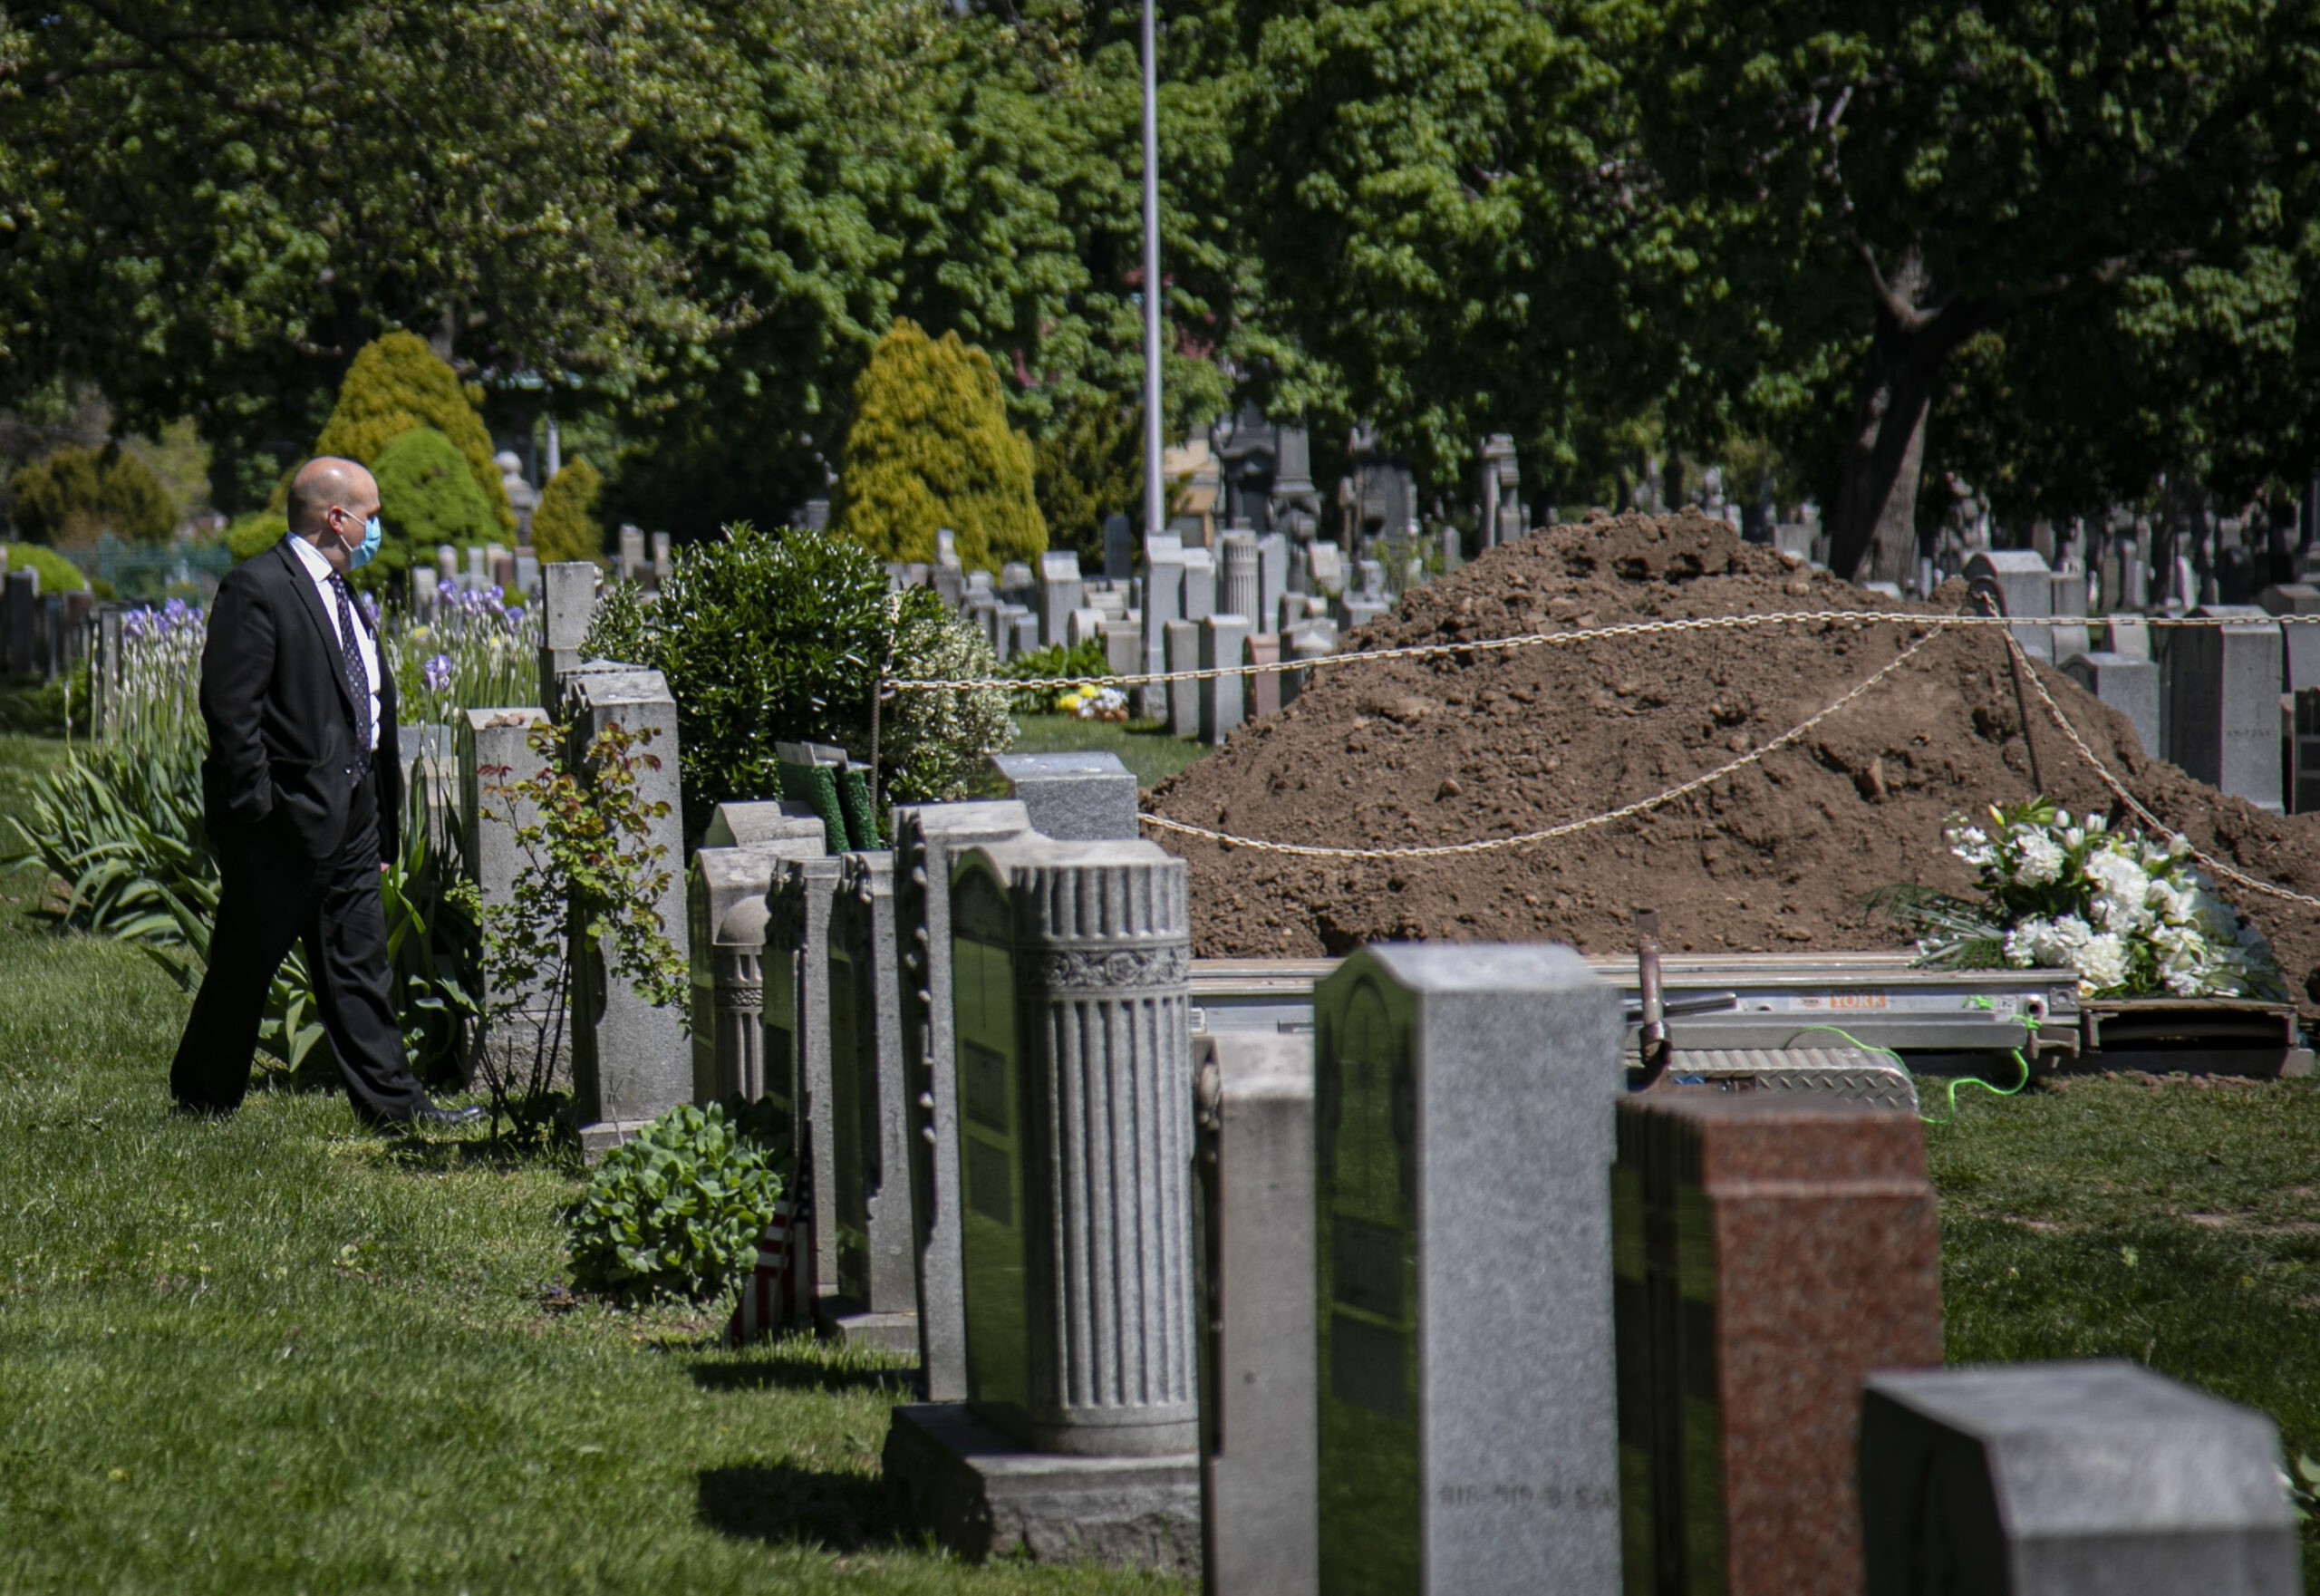 Robert Salerno, a funeral director, wears a mask as he reviews a gravesite